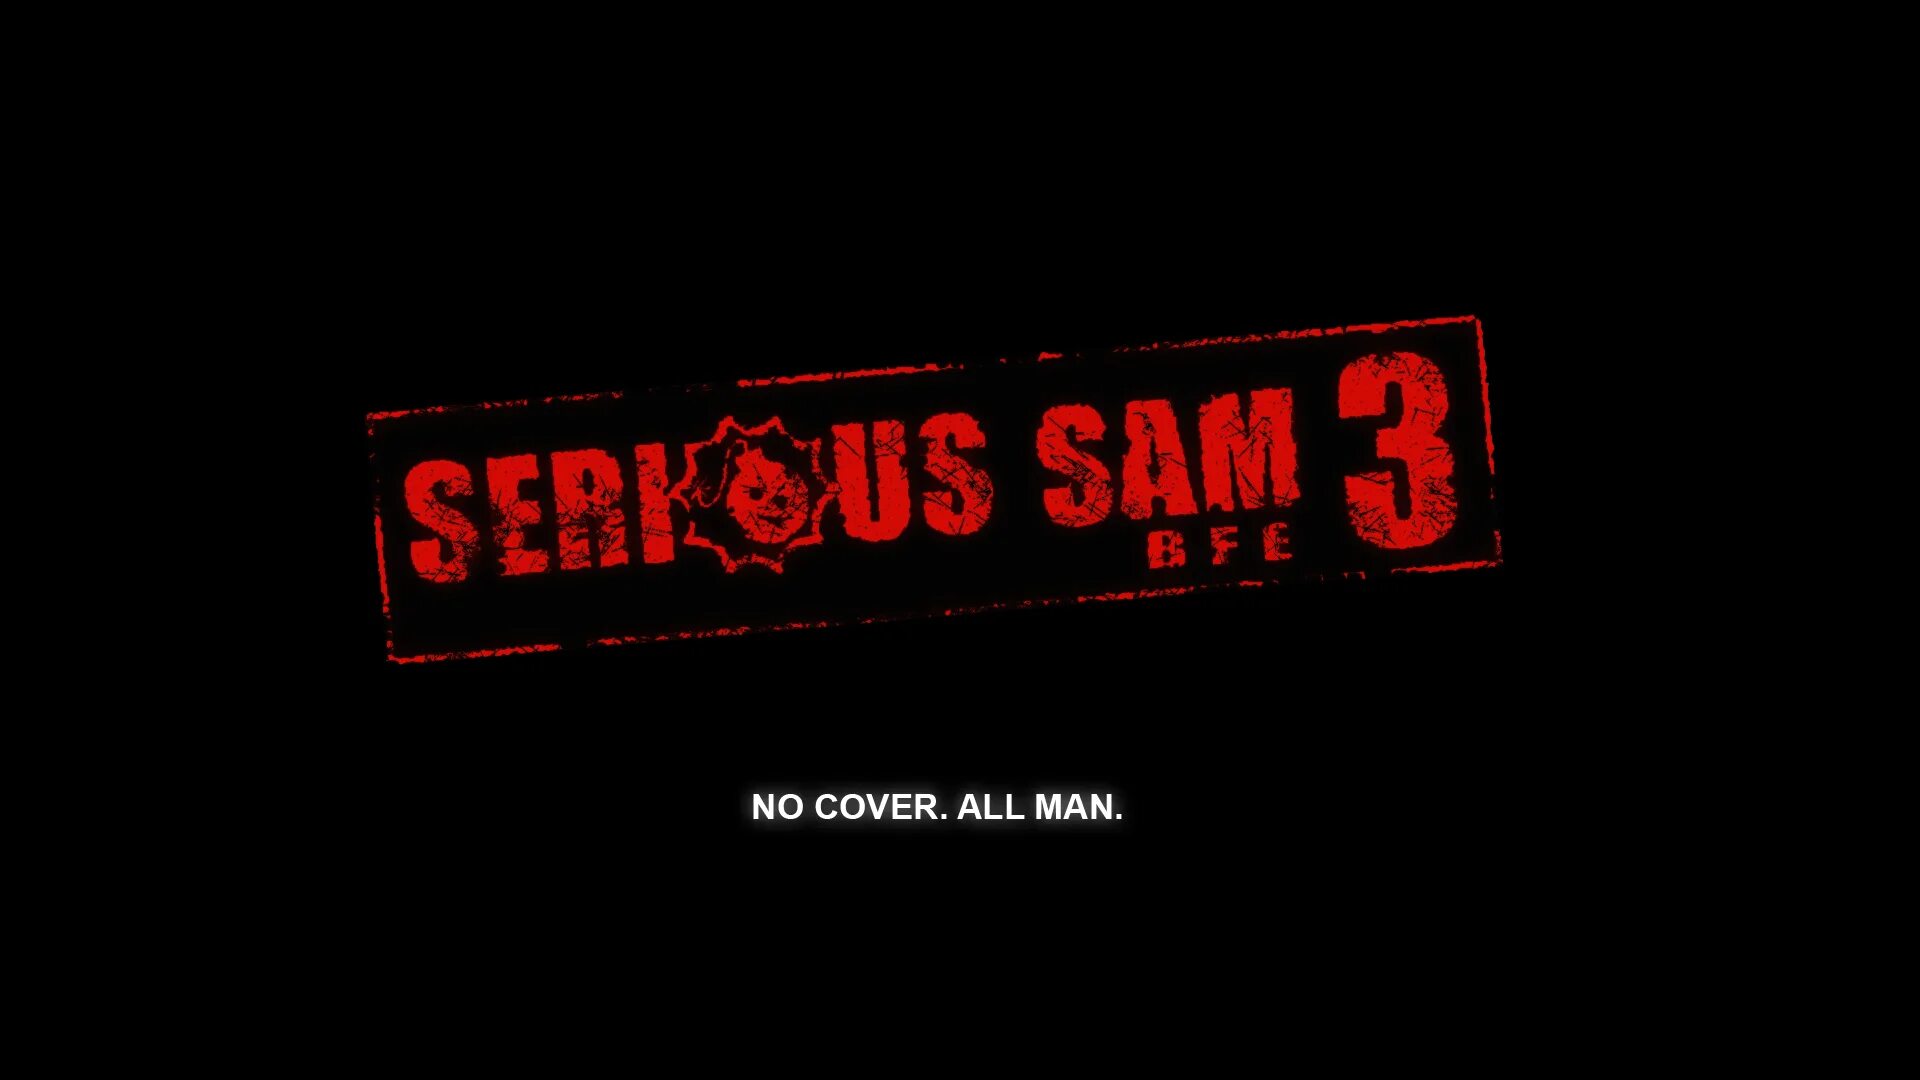 Often serious. Серьезный Сэм 3. Serious Sam 3 BFE. Serious Sam 3 BFE logo.